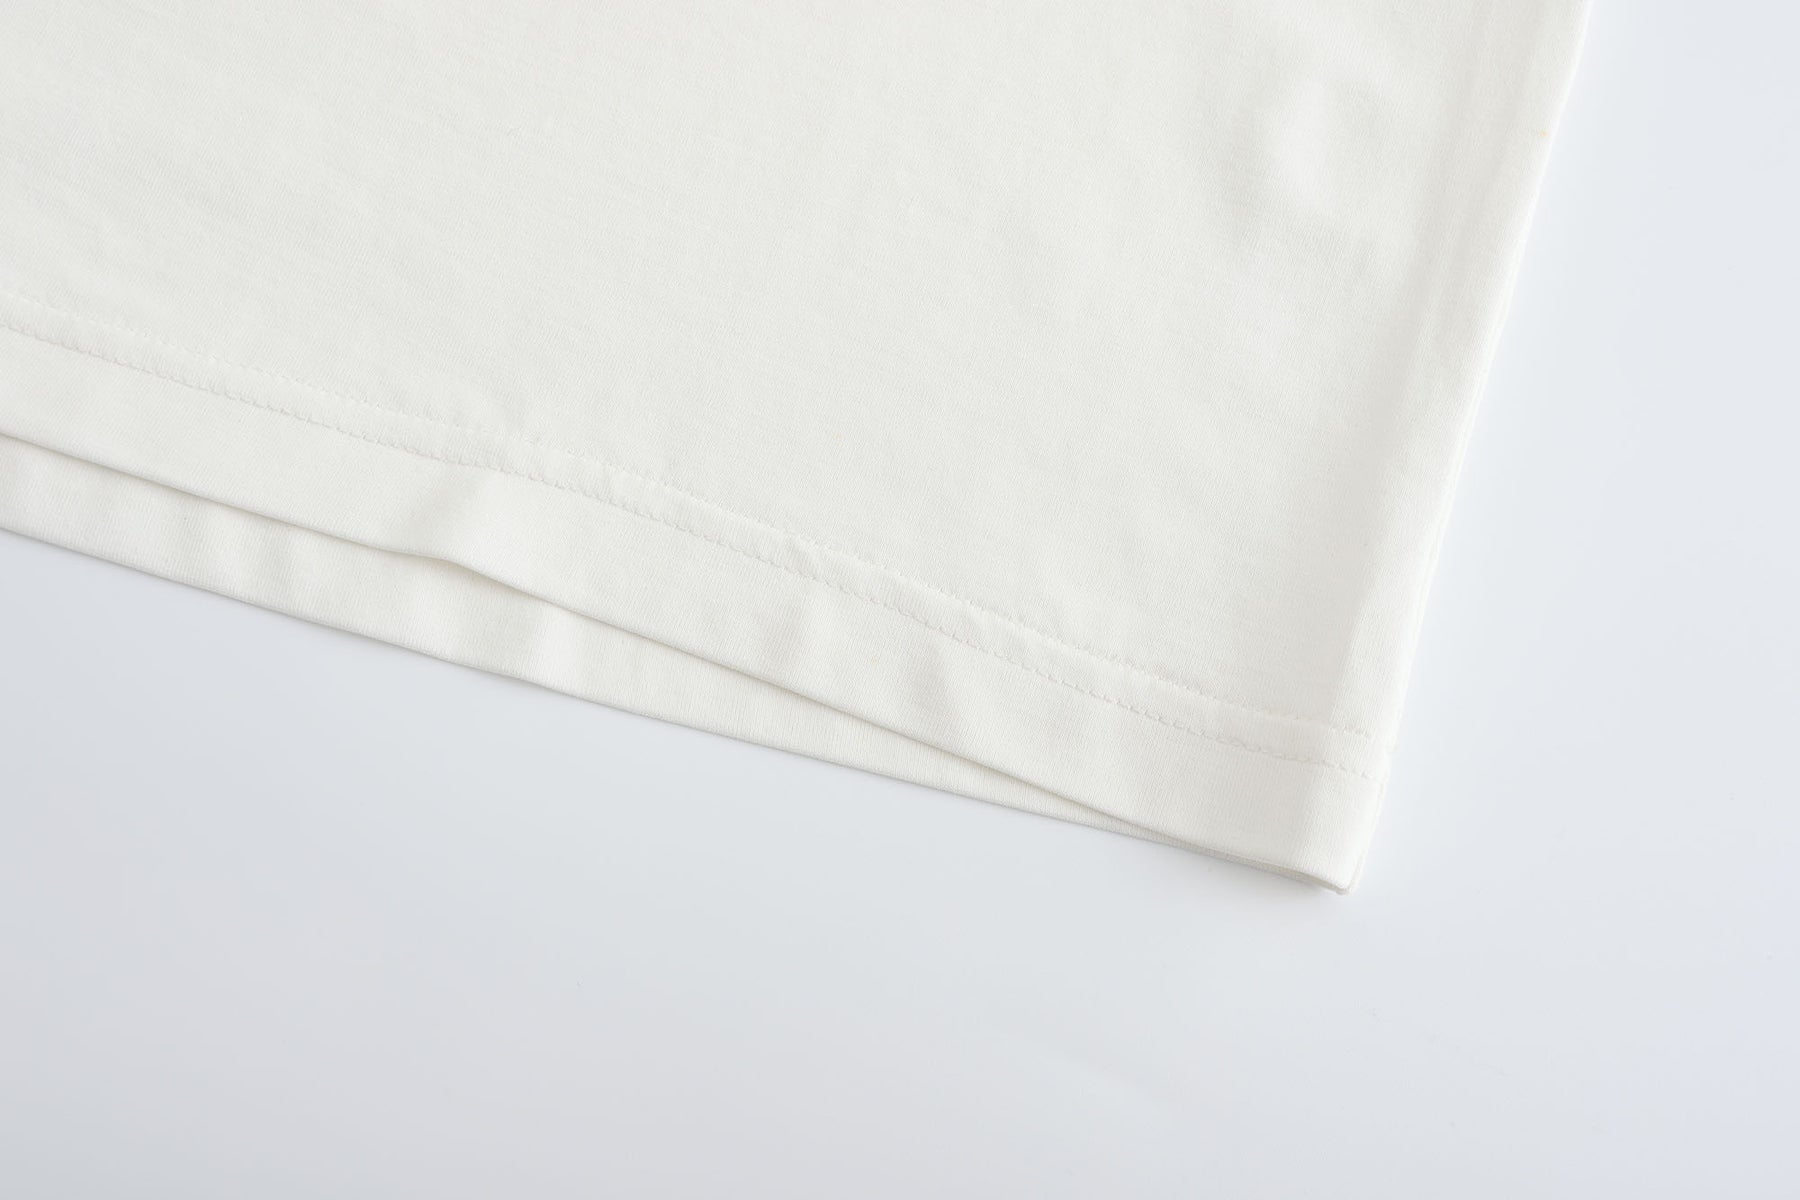 3 Emboridery Long Sleeve Tshirt - White